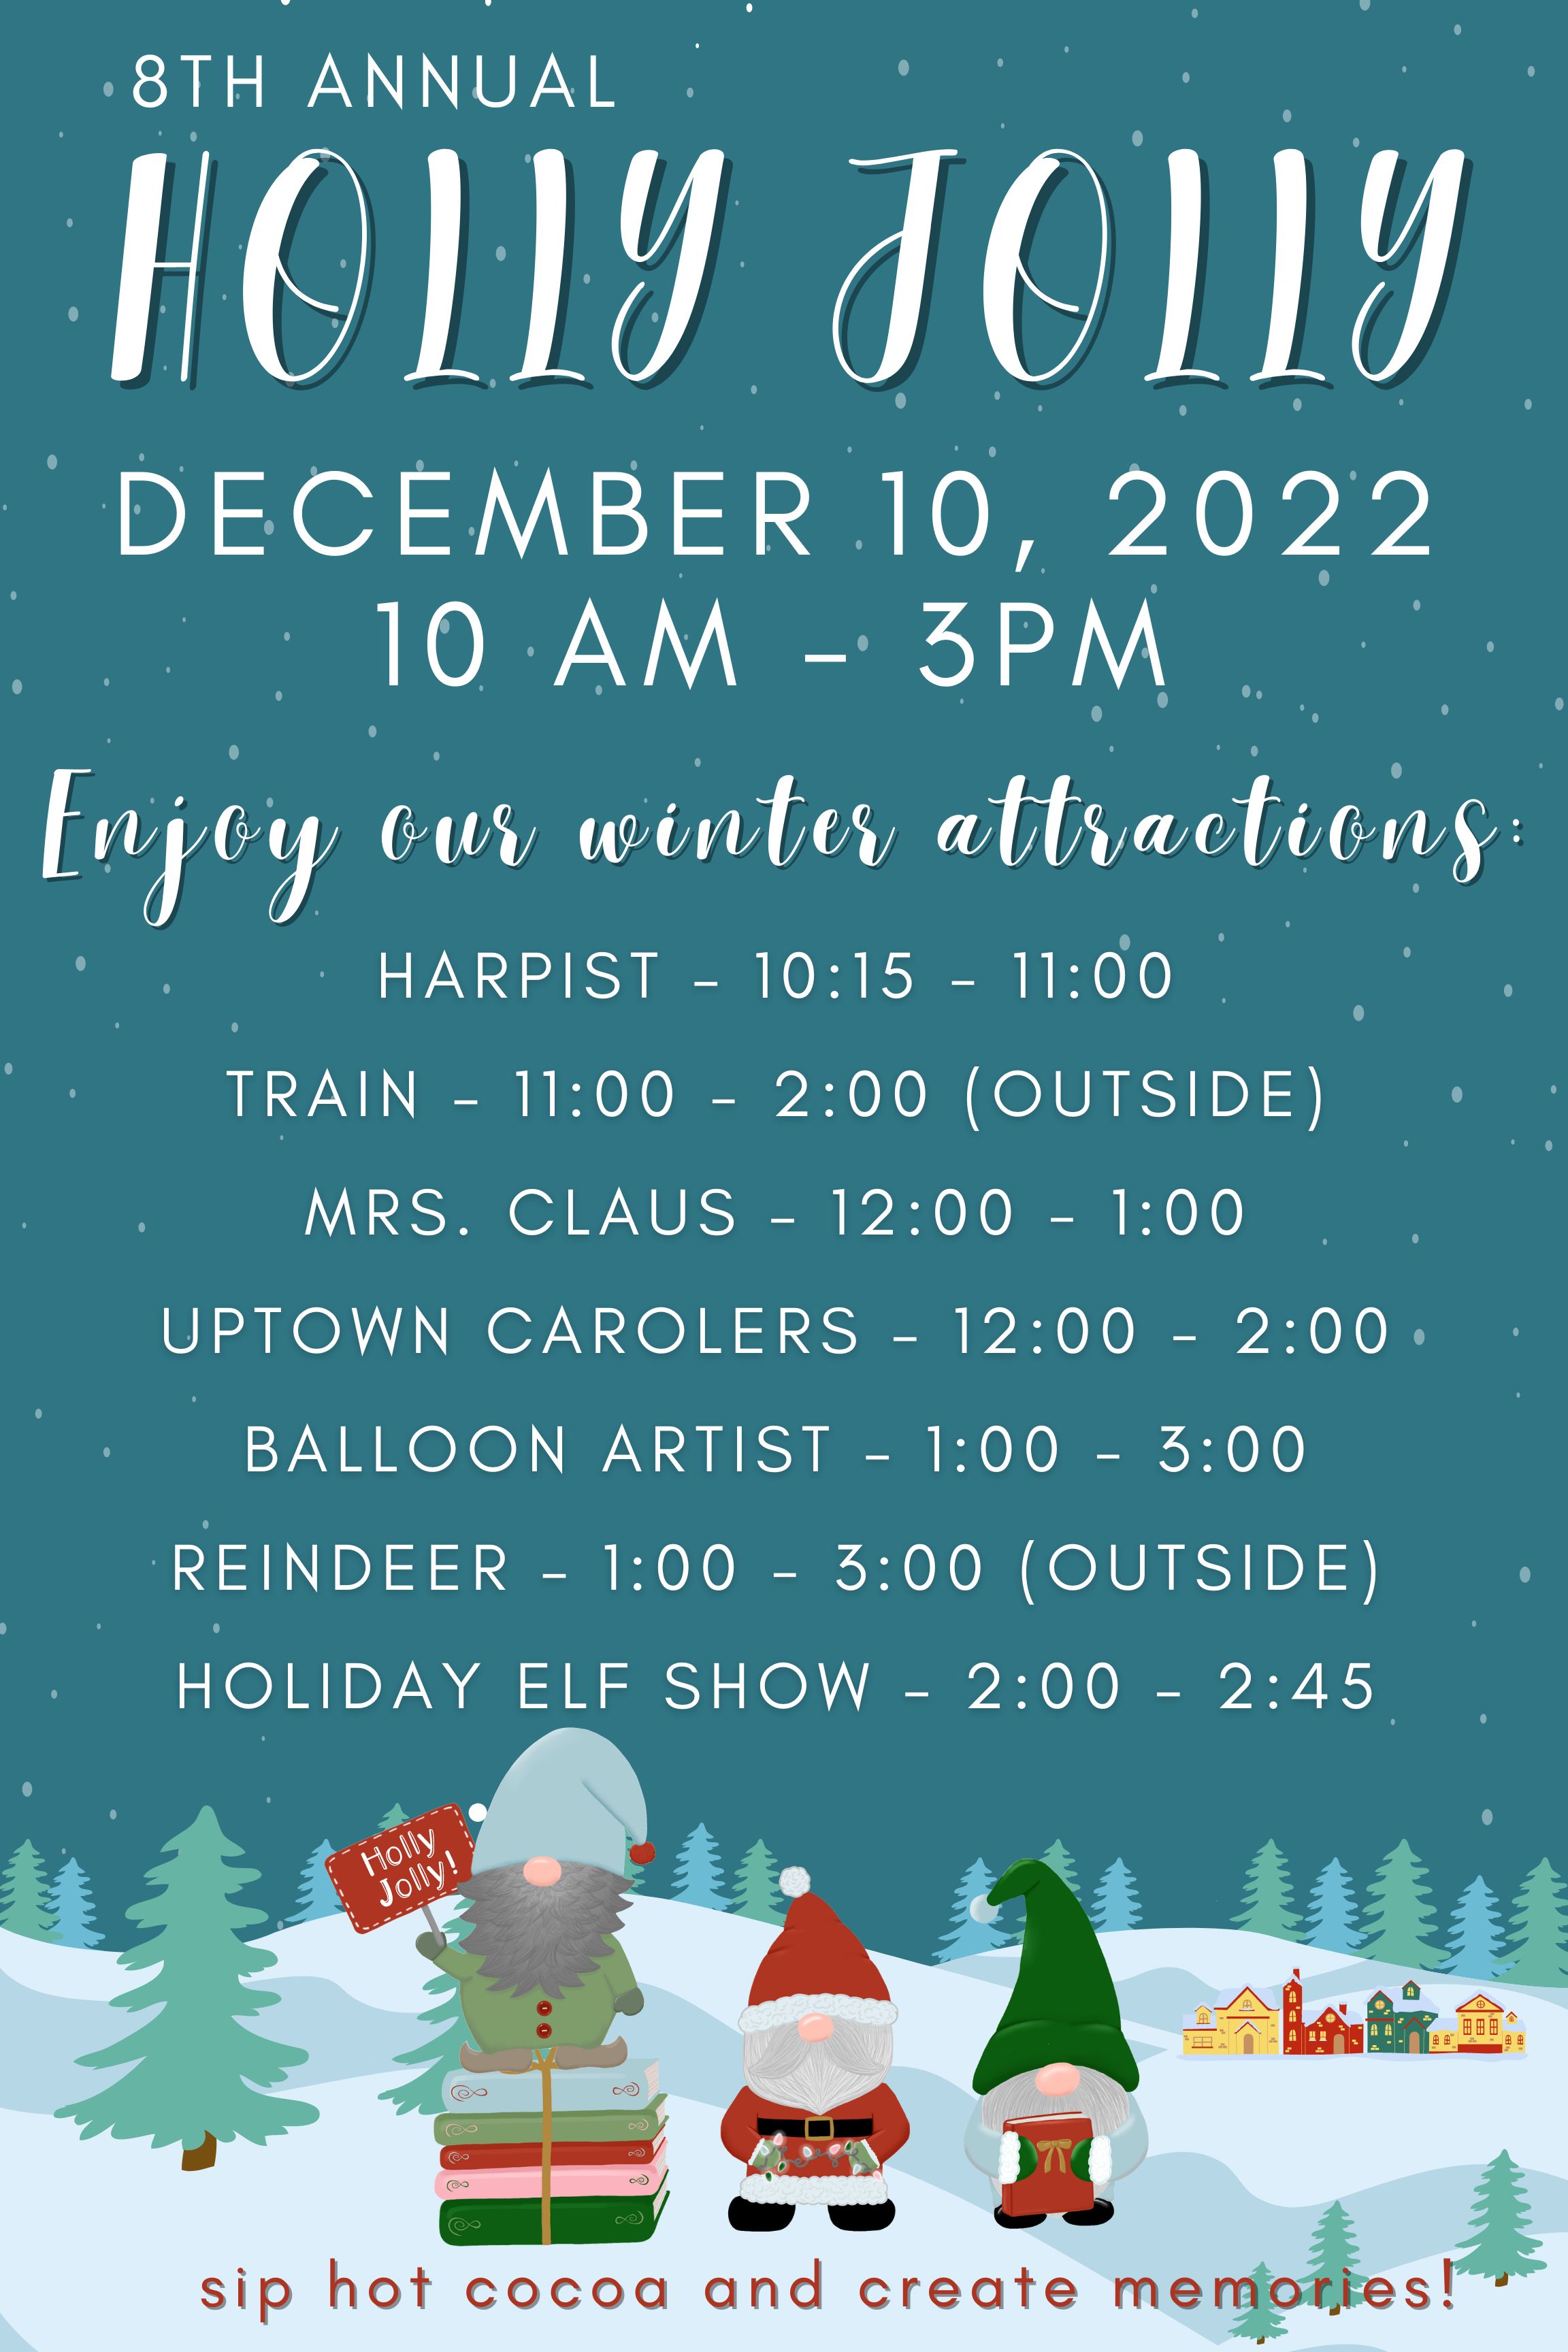 Holly Jolly December 10, 10 am - 3 pm schedule